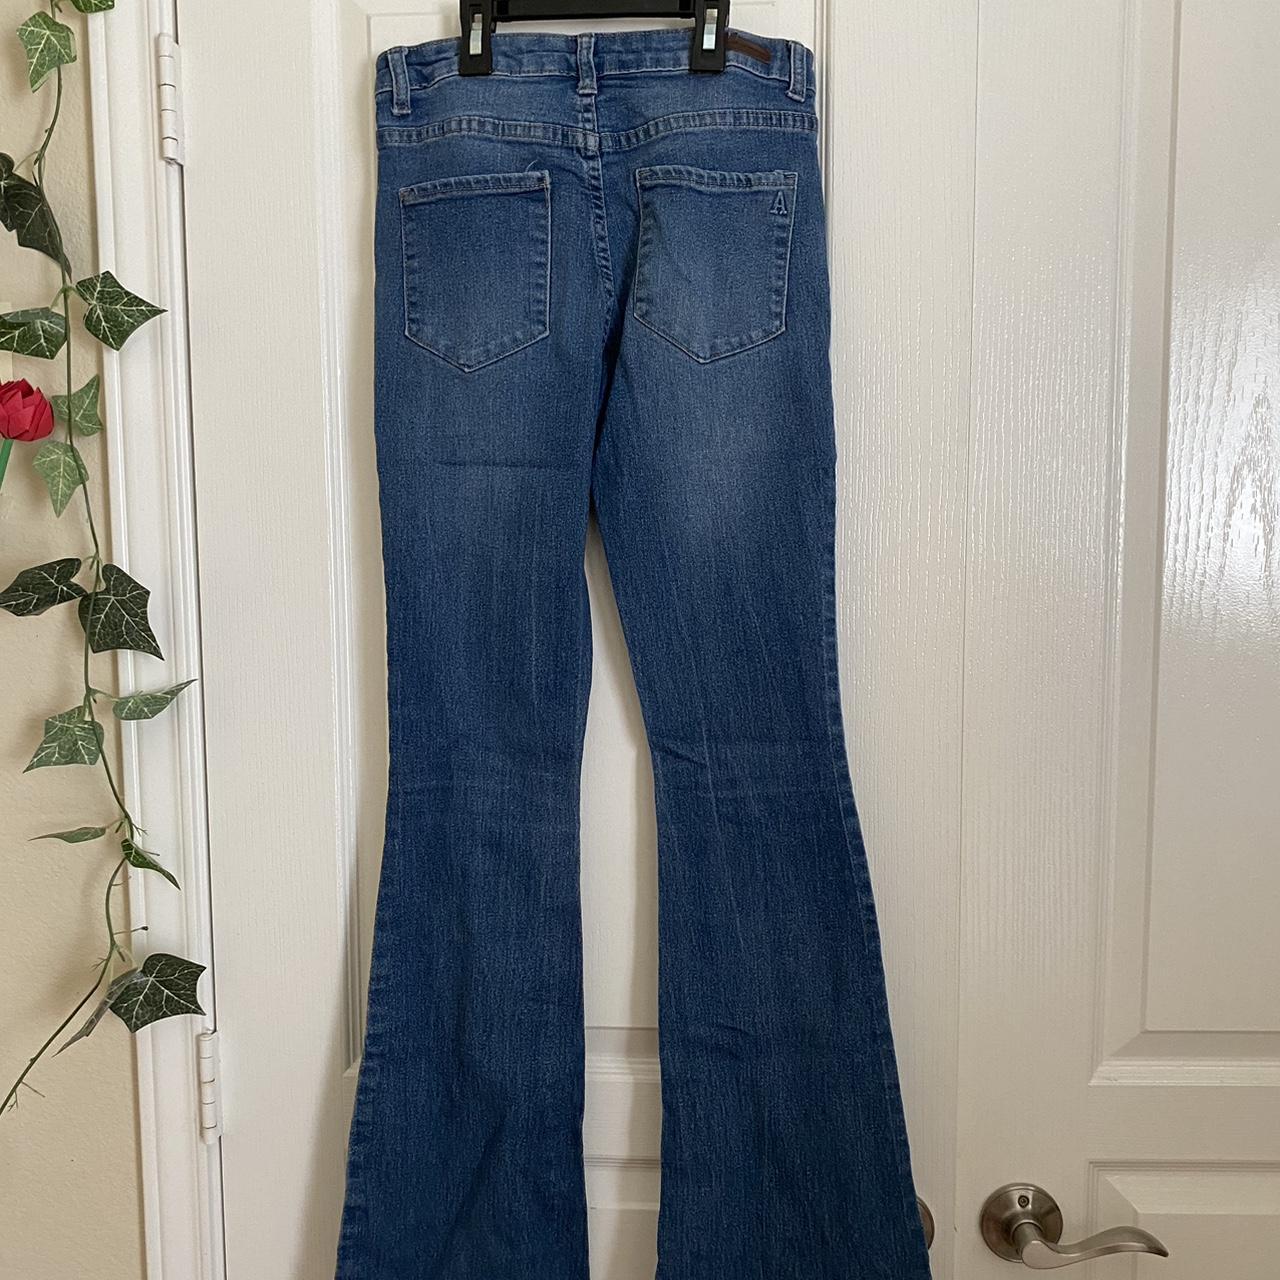 Carhartt Women's Navy Jeans (5)